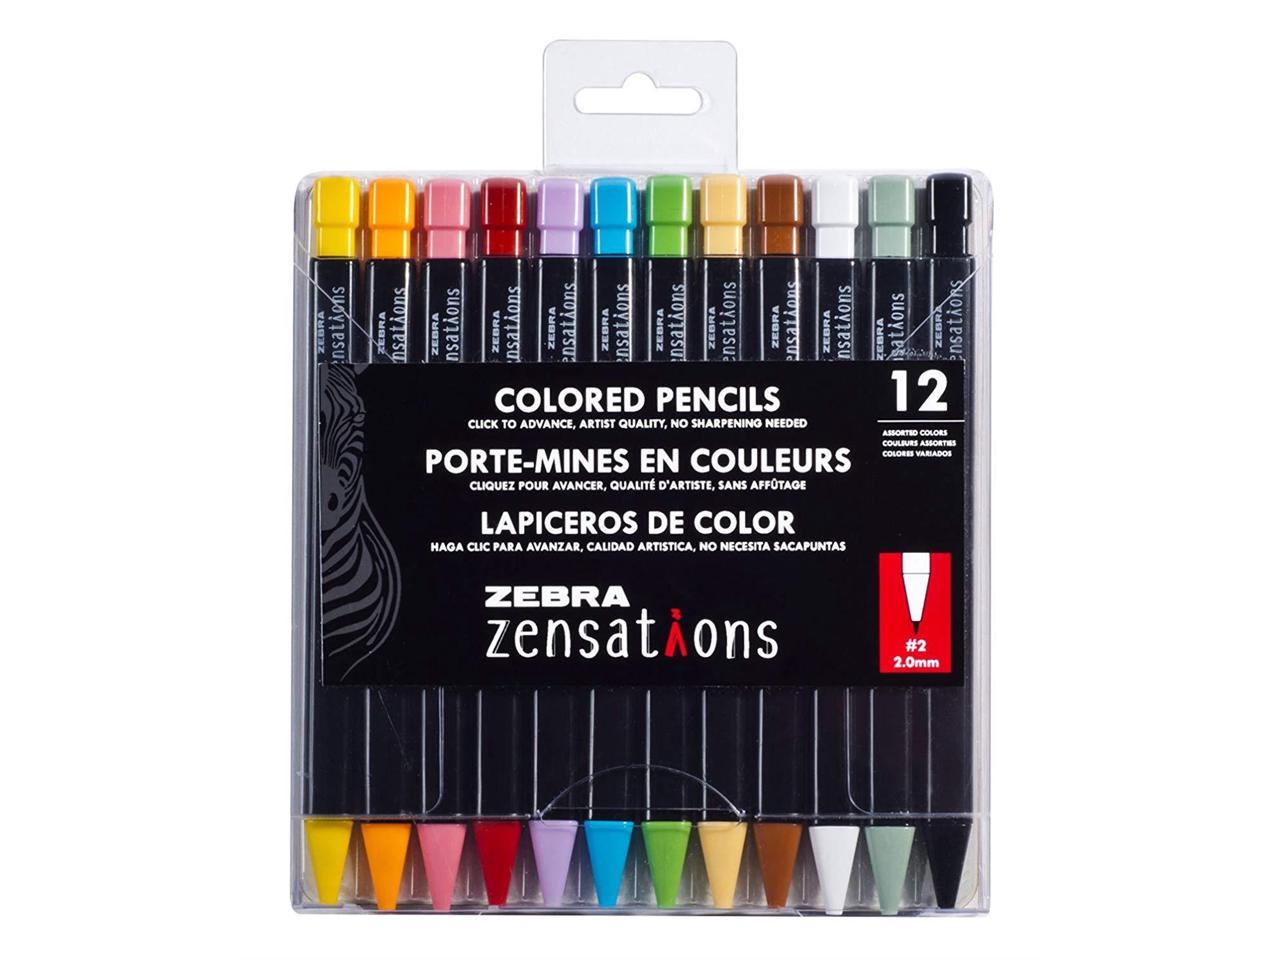 2.0mm 2 Graphite Lead Zebra Zensations Mechanical Pencils 12-Count